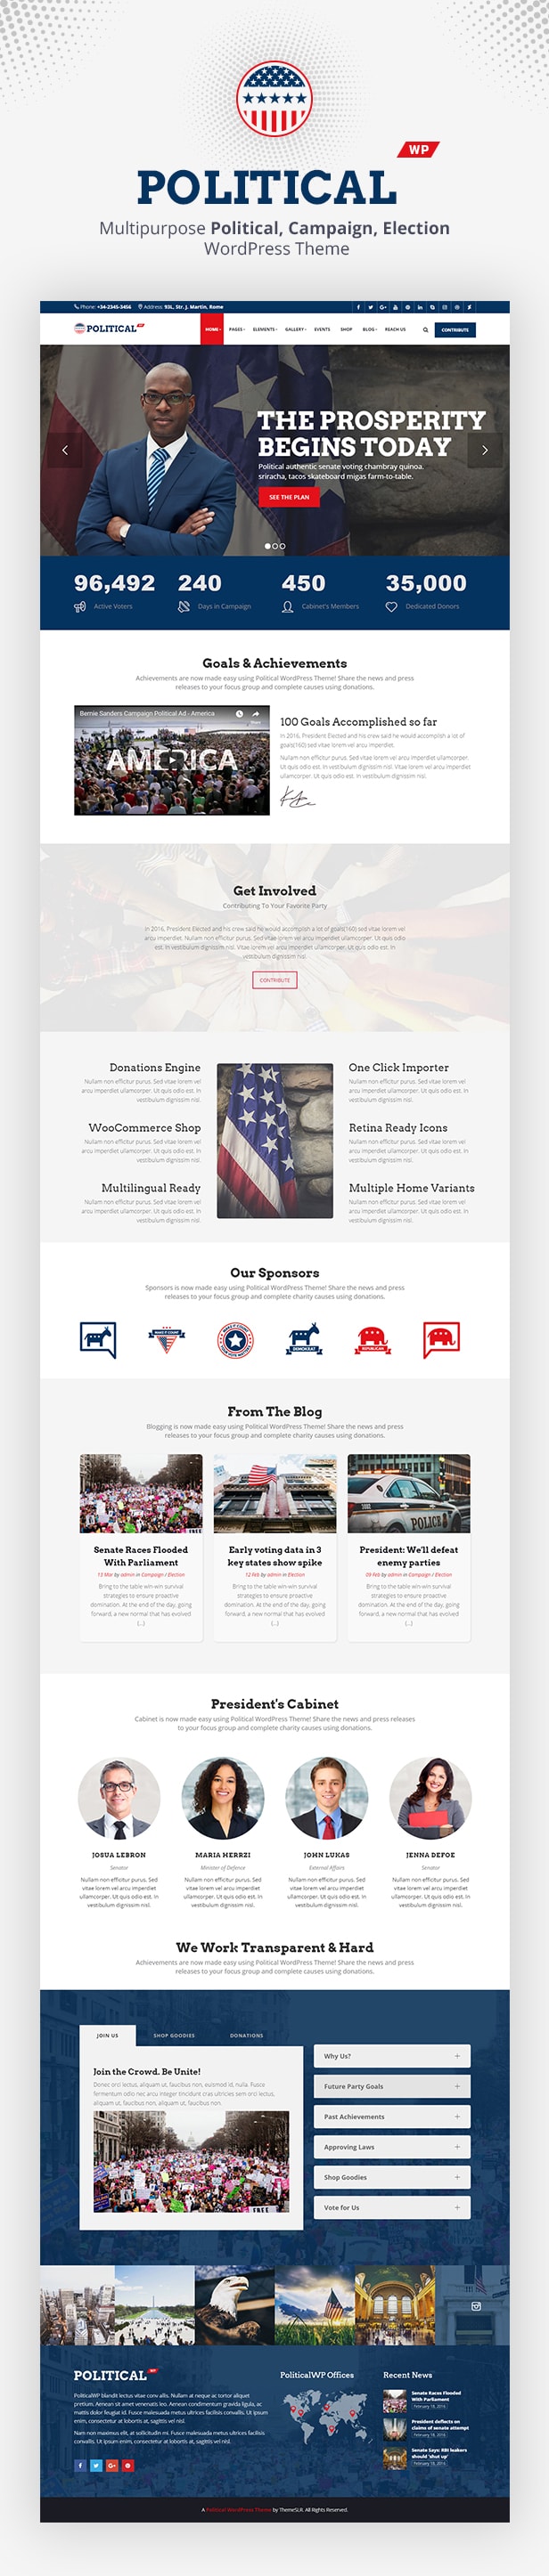 PoliticalWP - Political Campaign WordPress Theme - 1